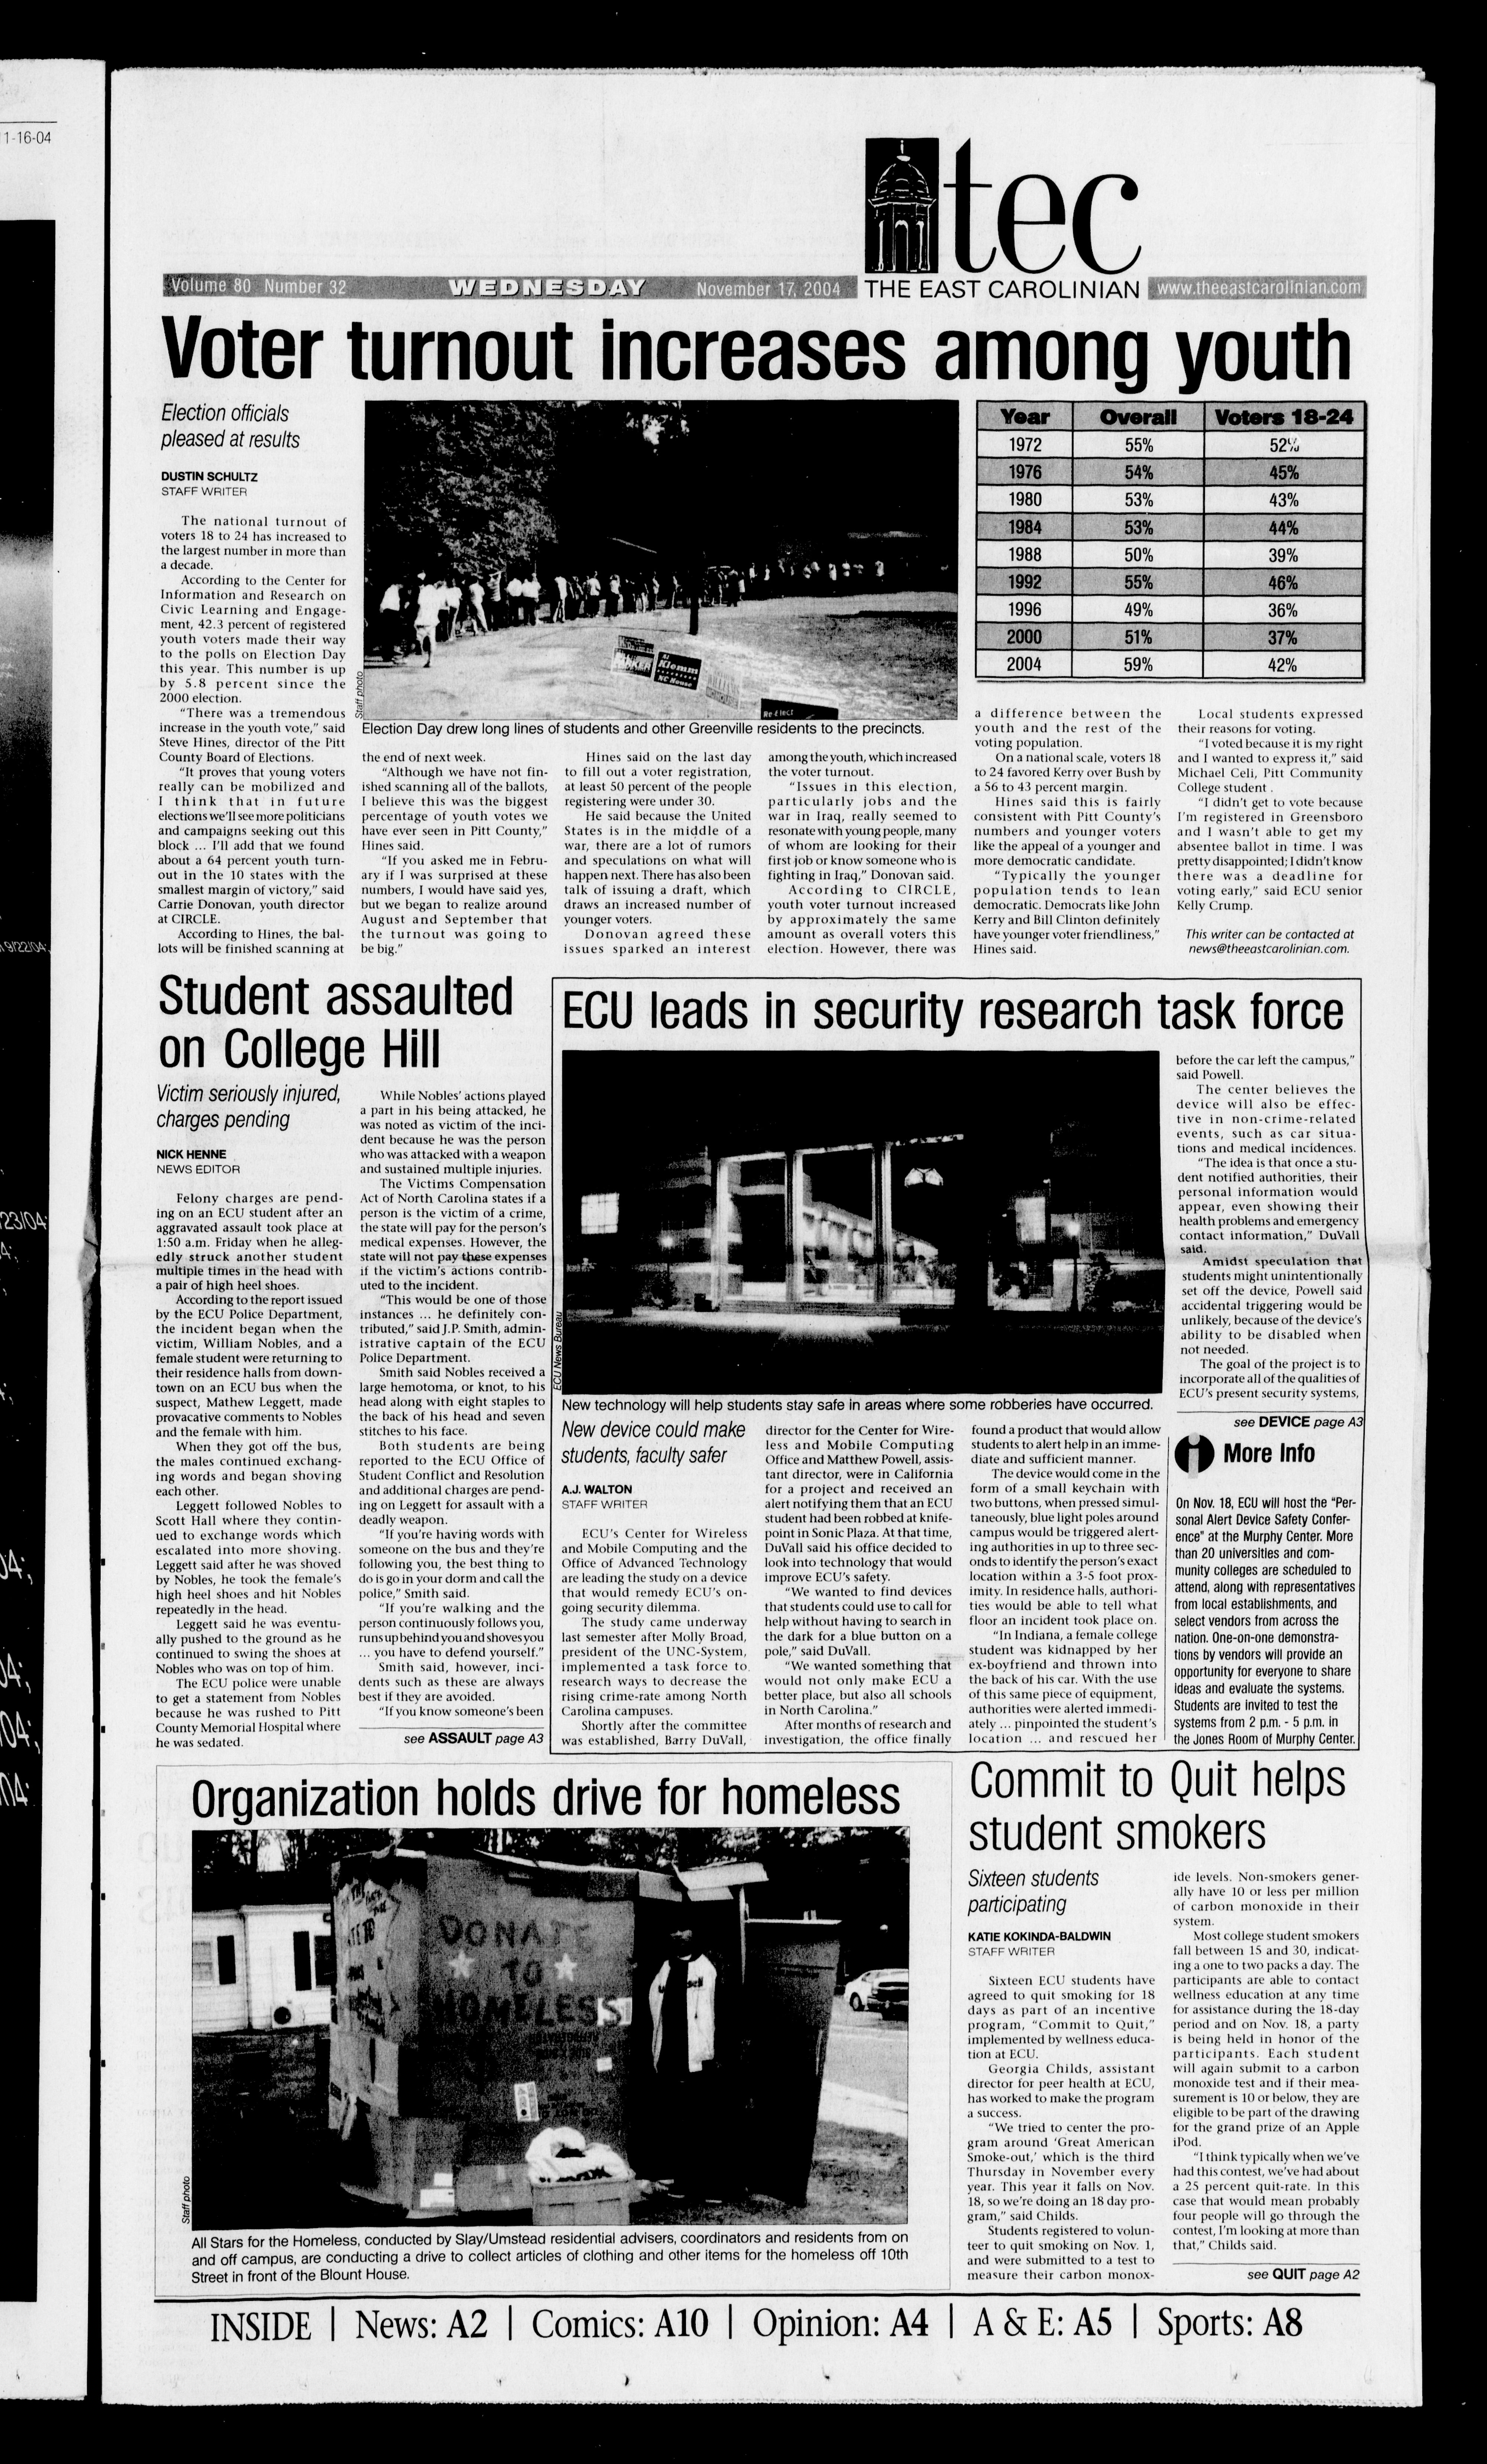 The East Carolinian, November 17, 2004 pic